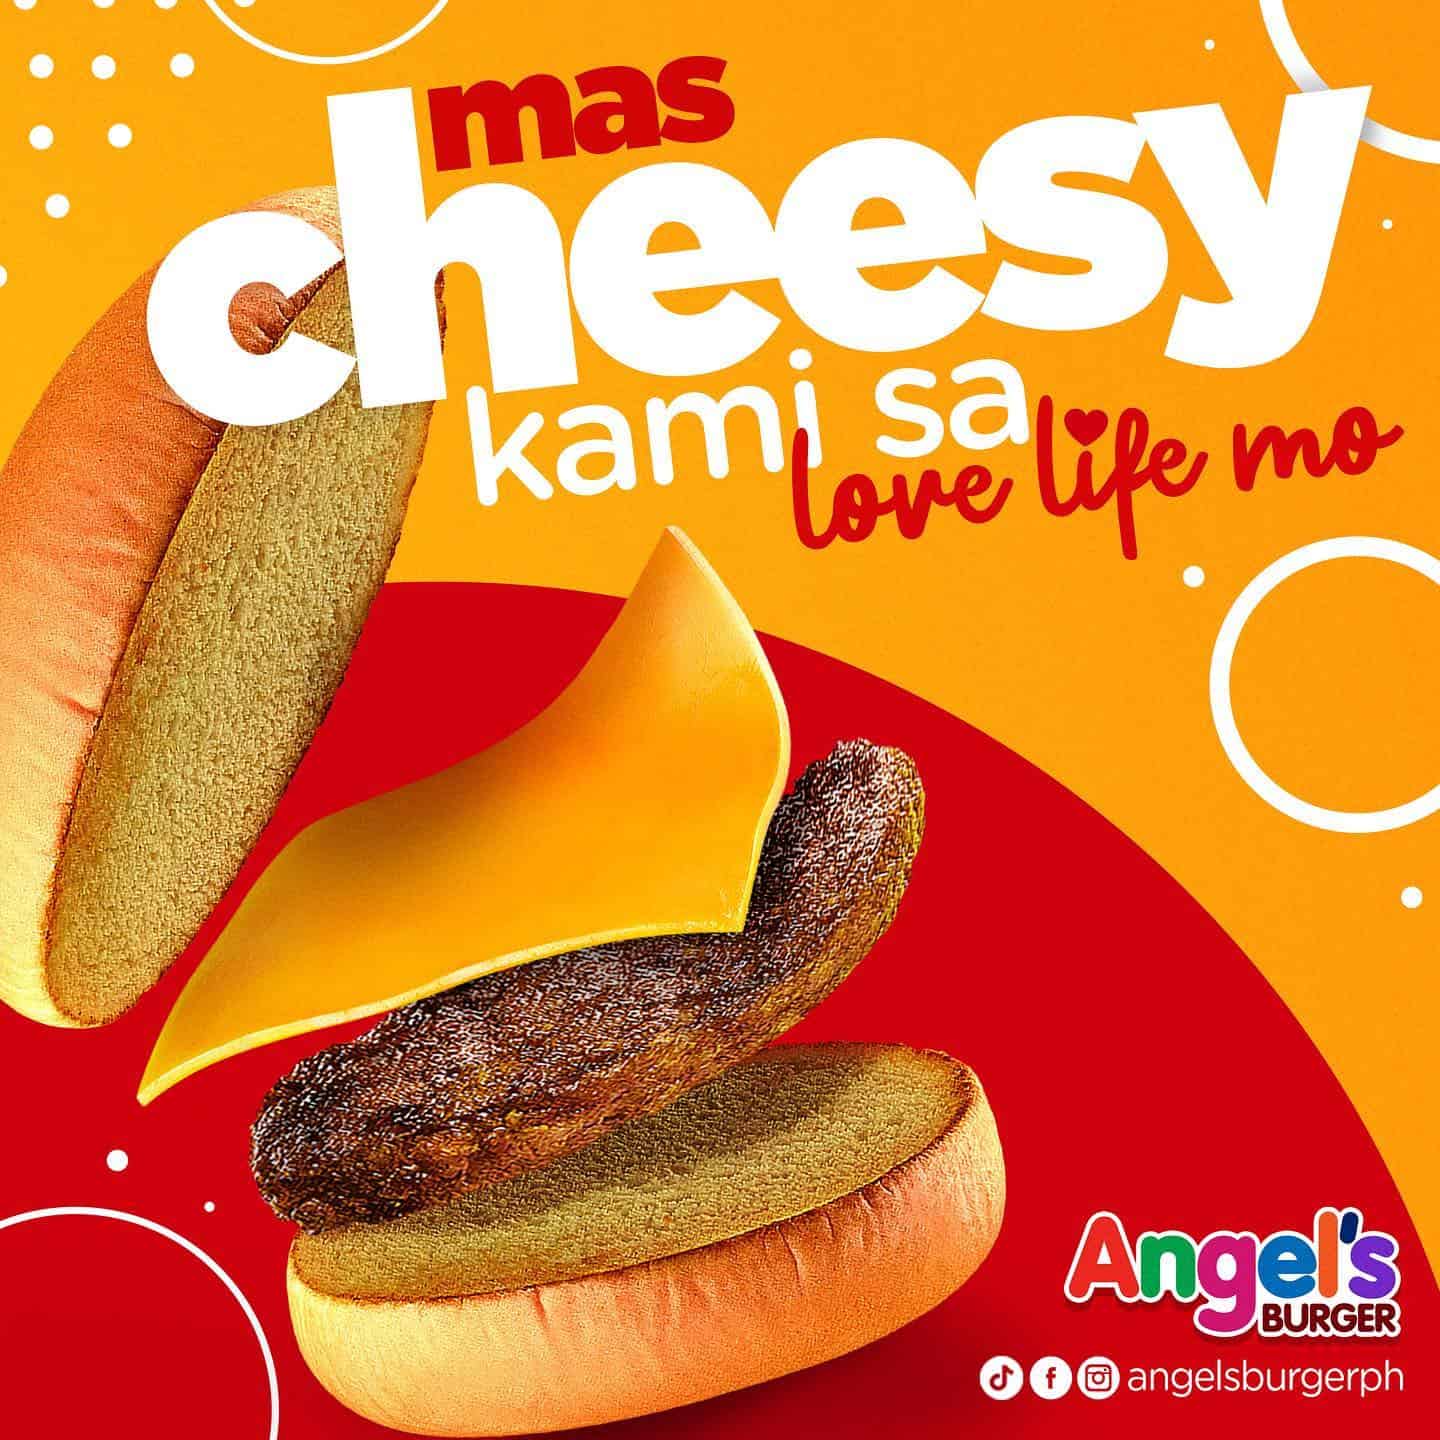 Cheese Burger on Angels Burger Menu Philippines